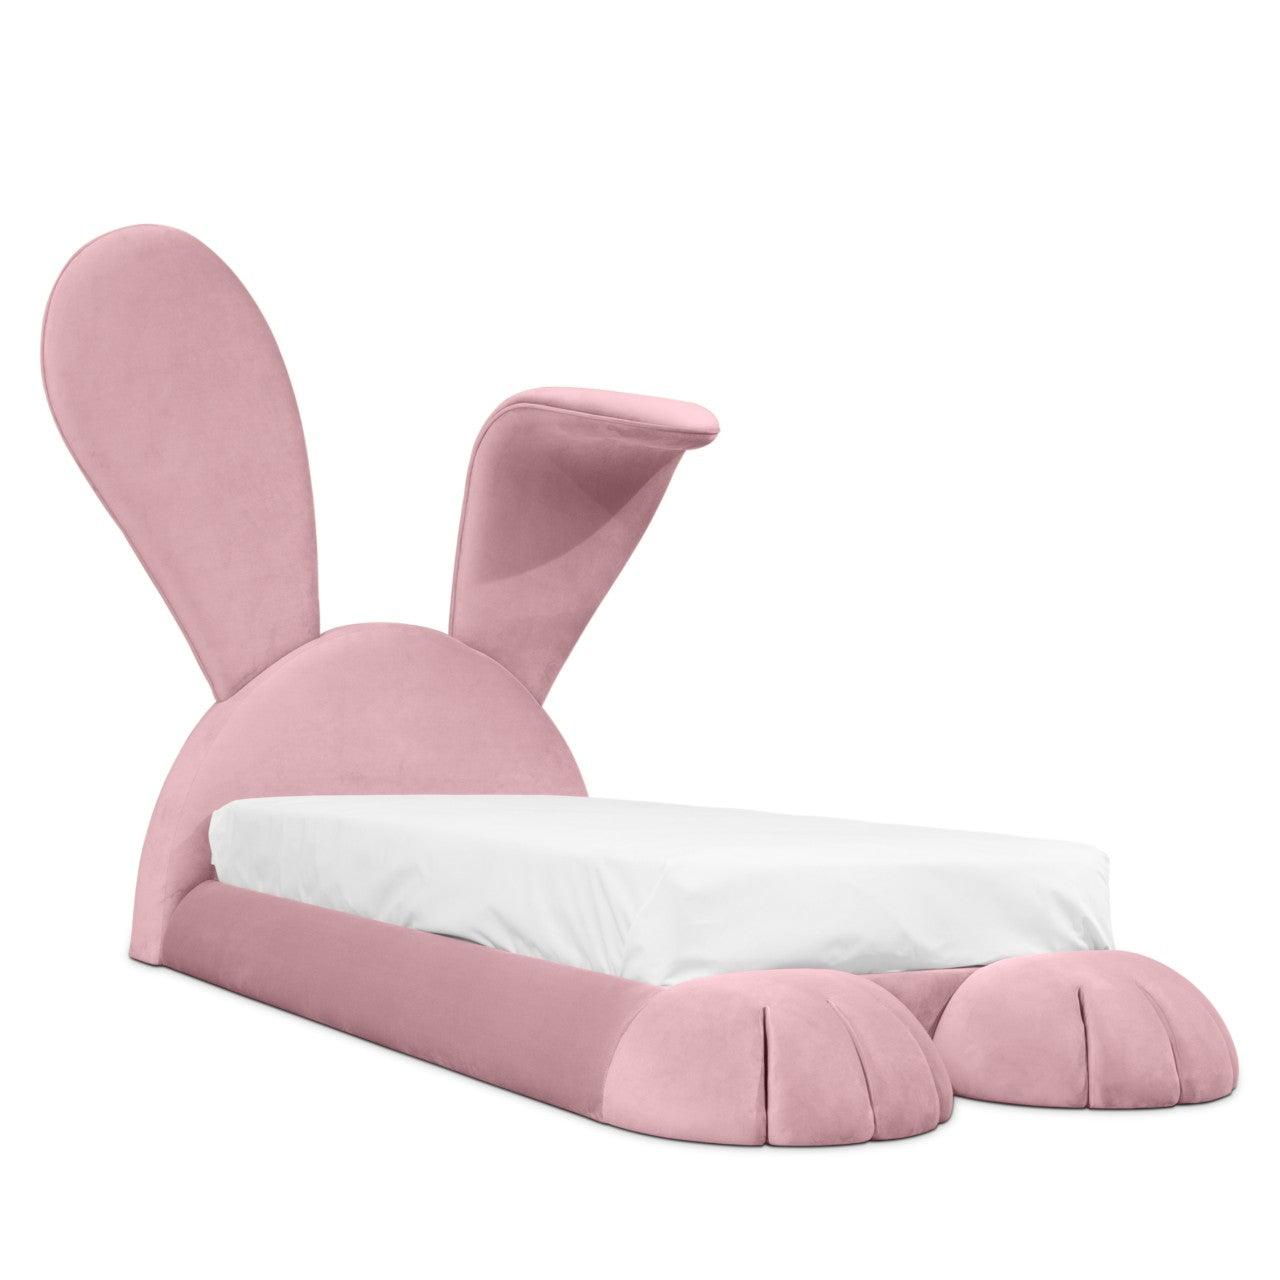 Mr. Bunny Luxury Children's Bed